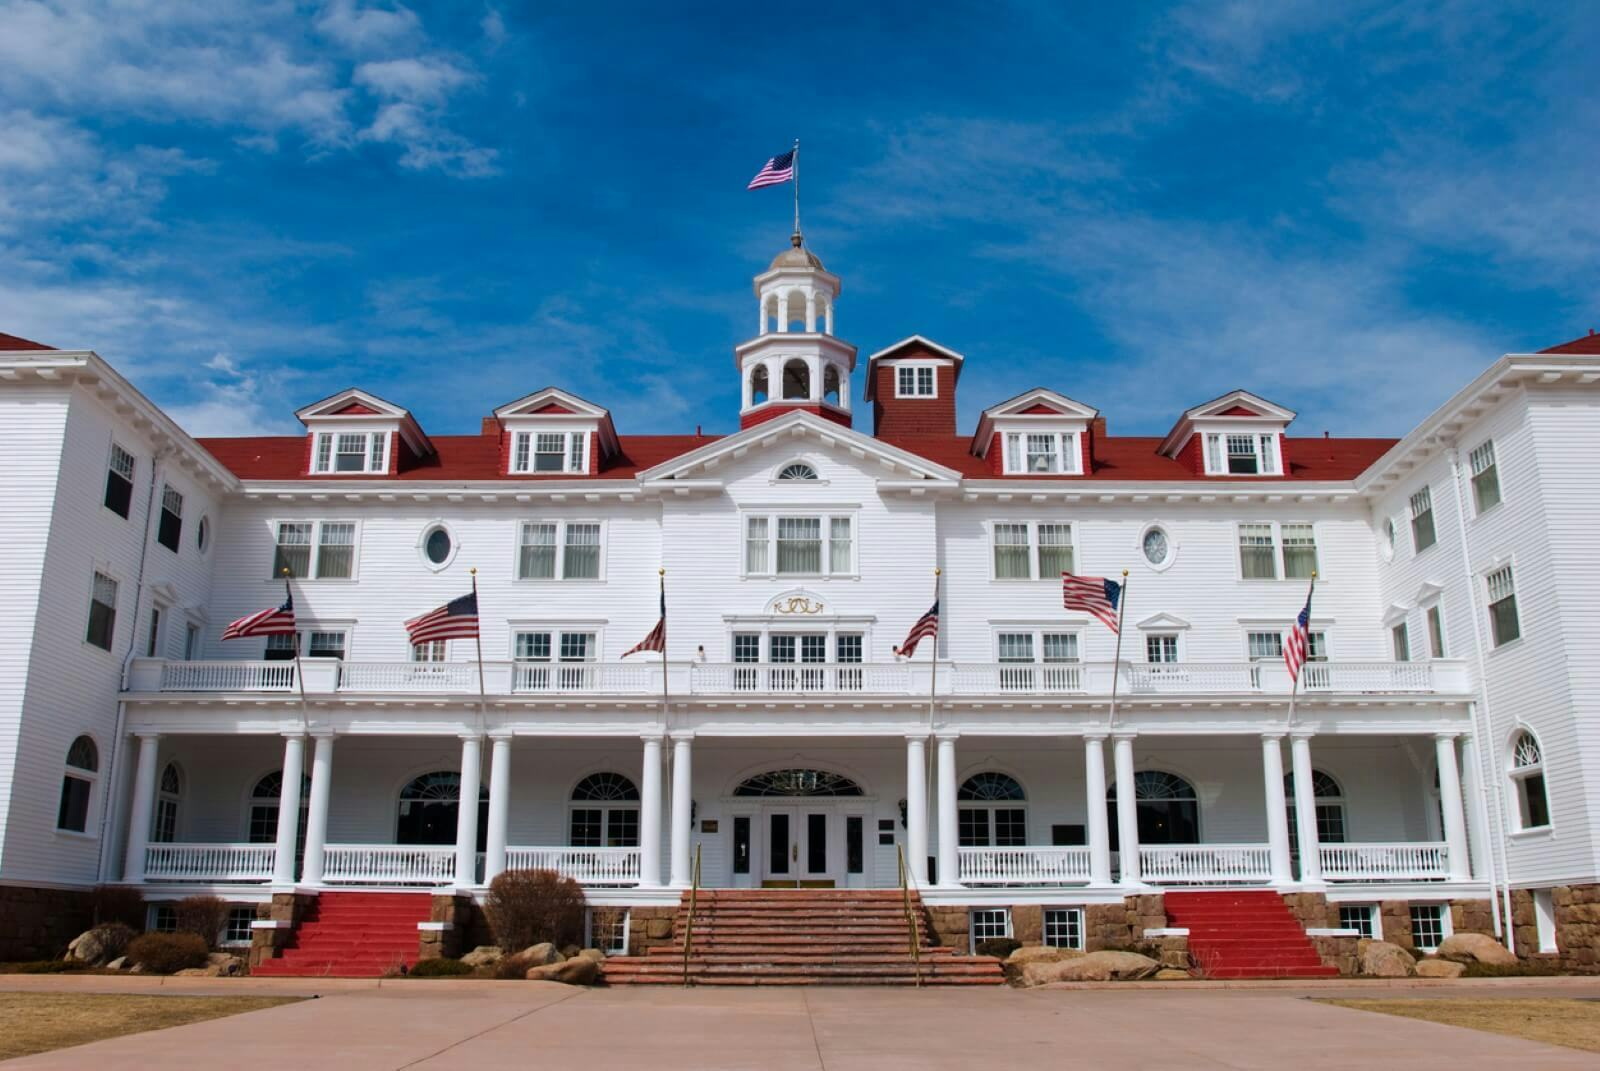 The grand white entrance of the Stanley Hotel near Estes Park, Colorado